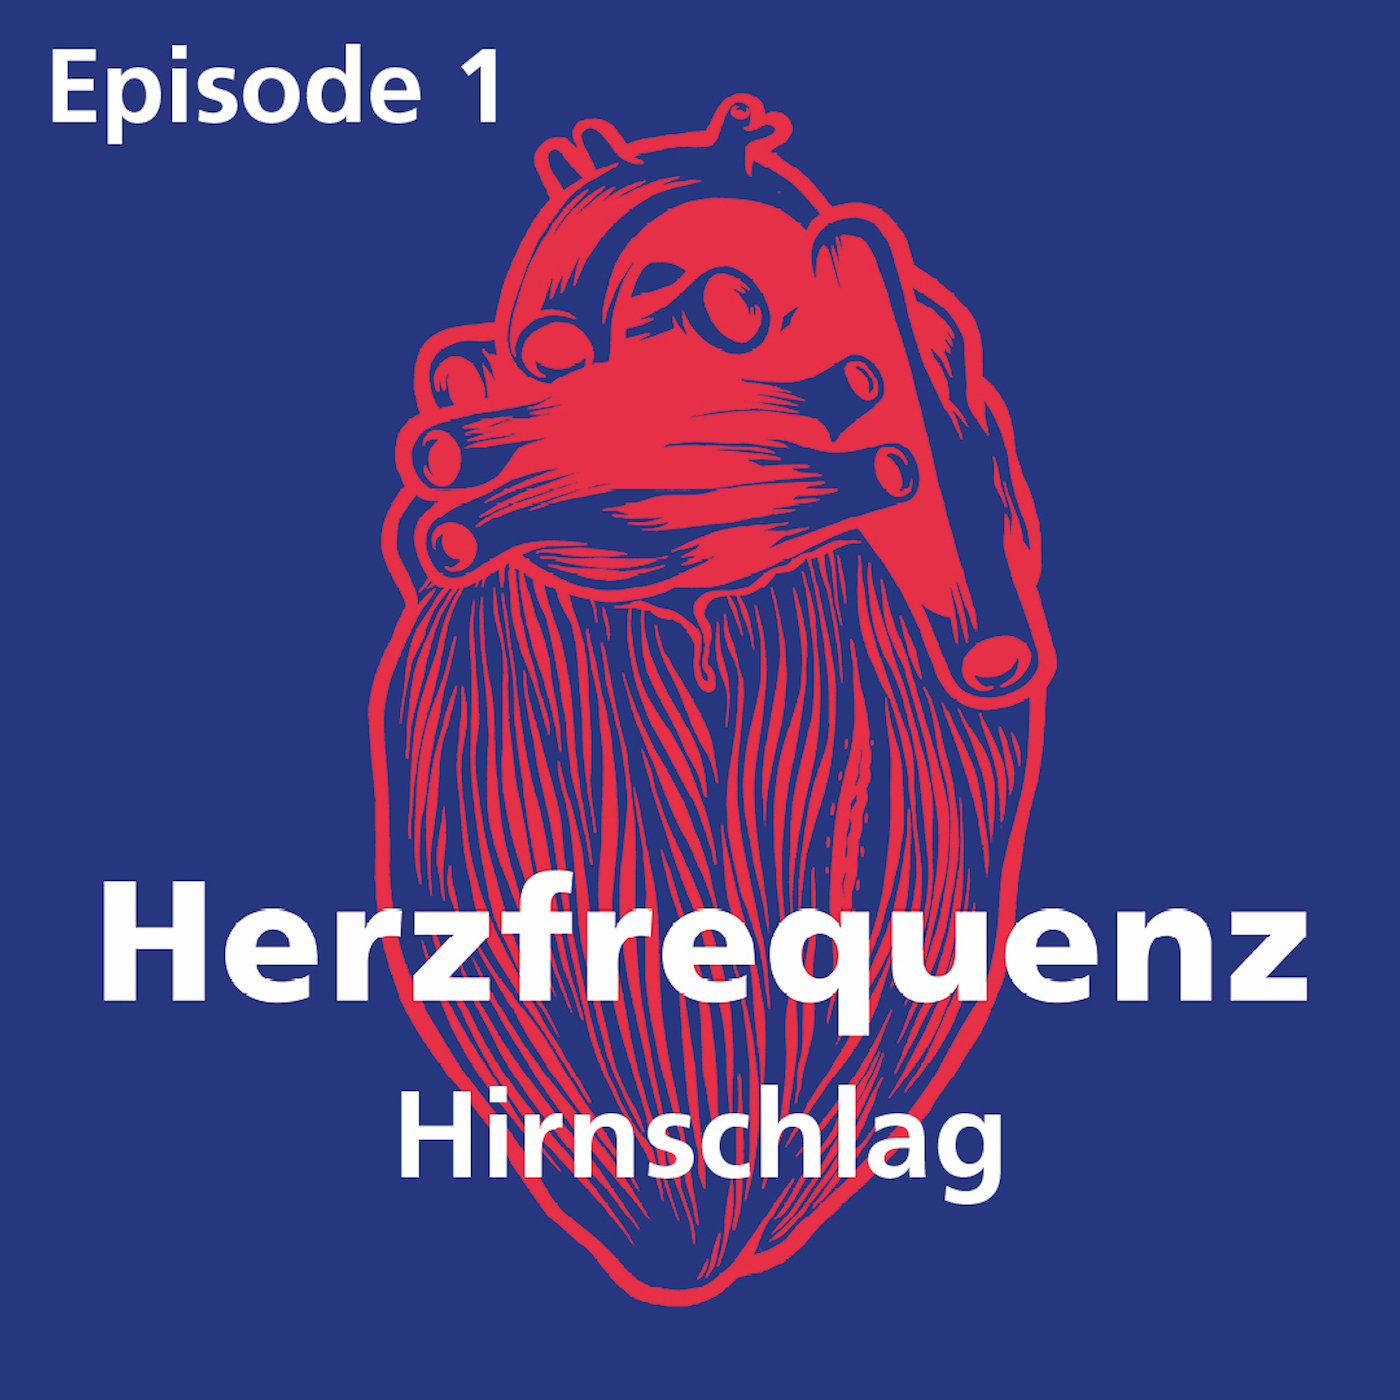 Artwork for podcast Herzfrequenz